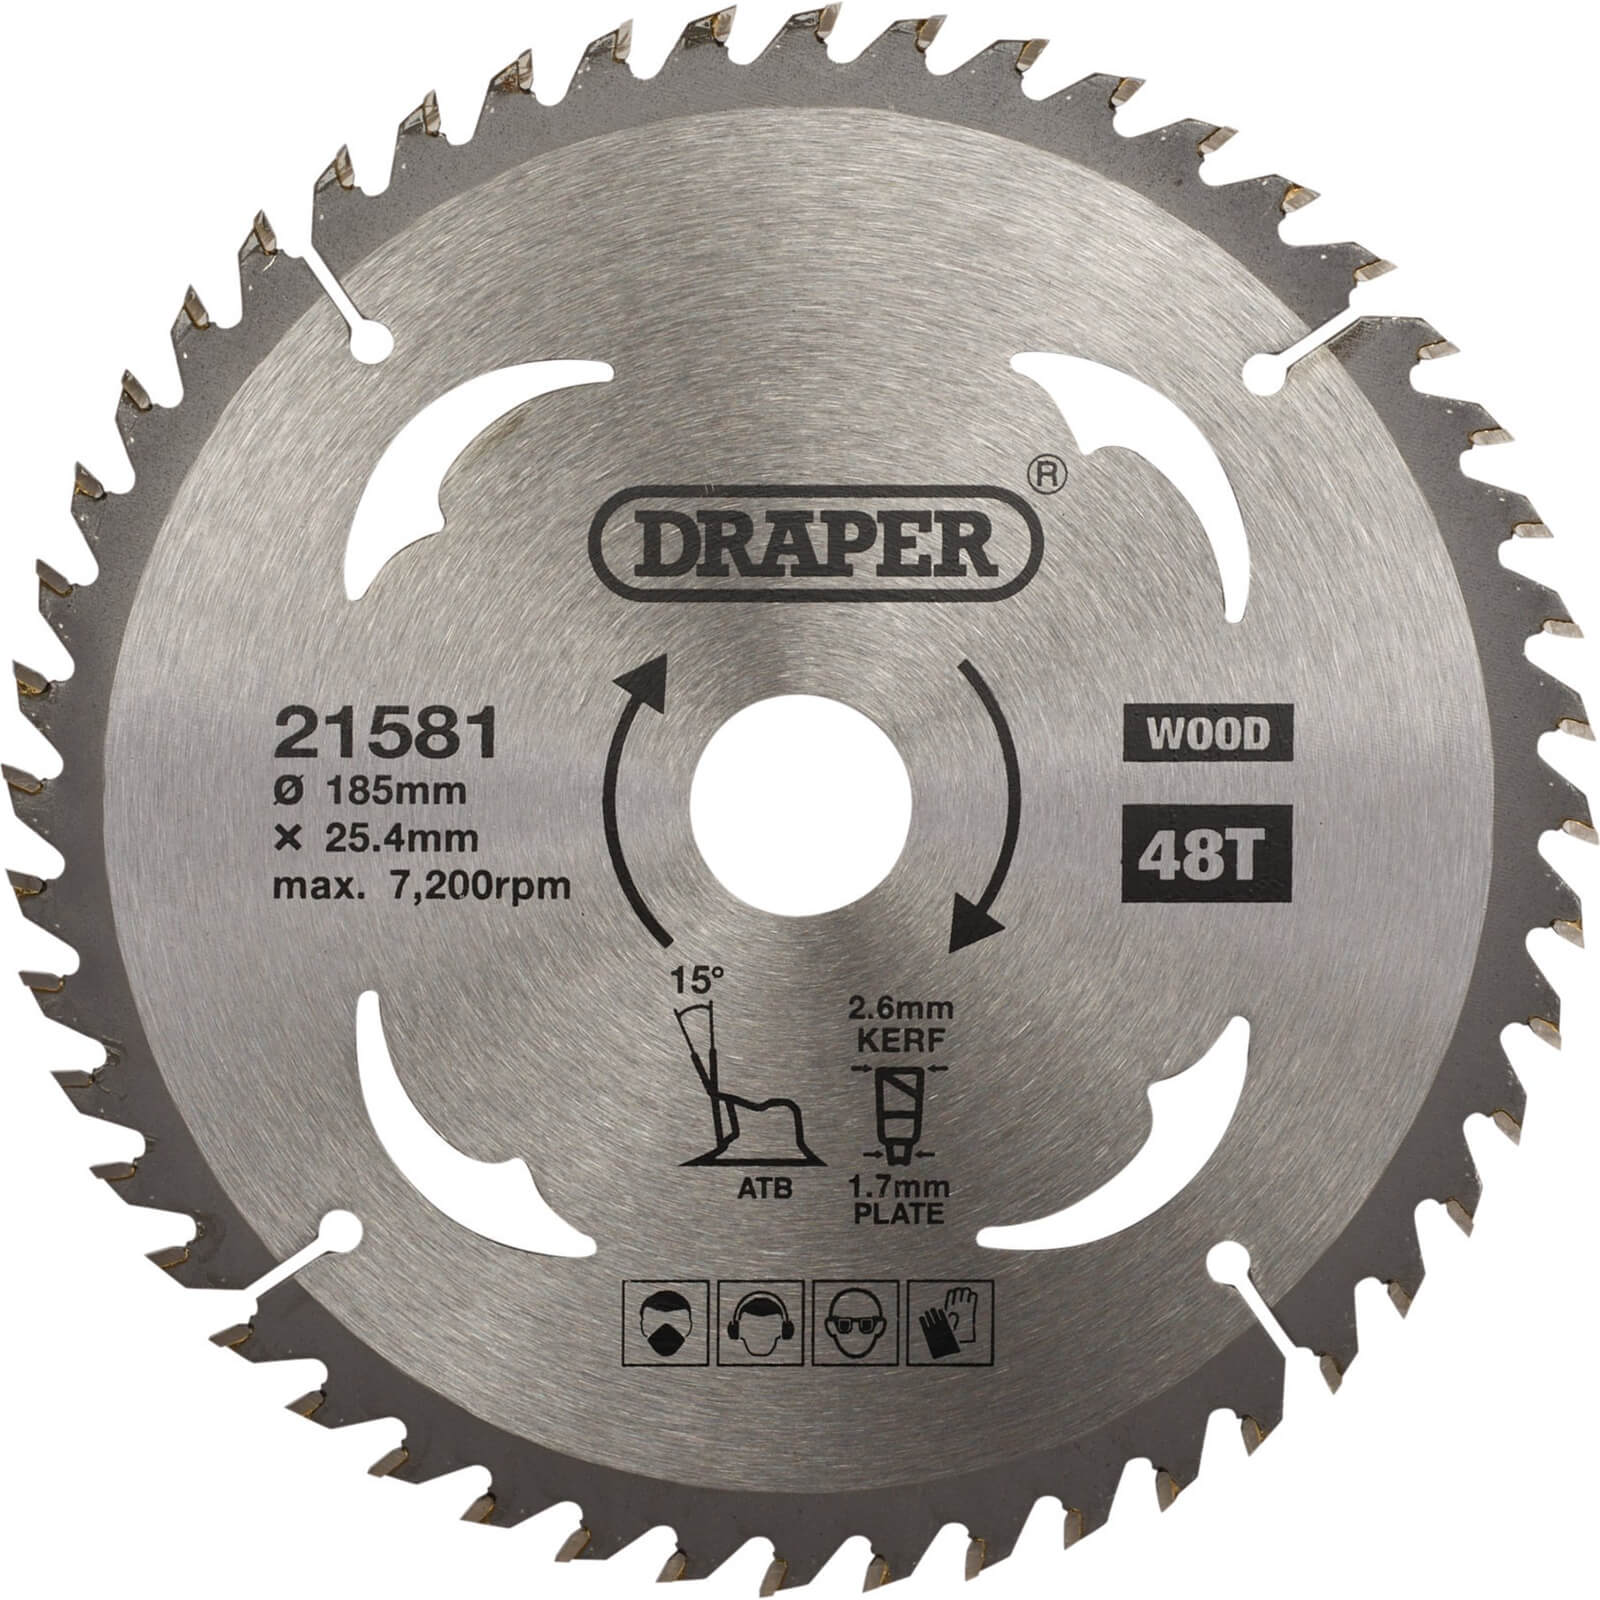 Image of Draper TCT Wood Cutting Circular Saw Blade 185mm 48T 25.4mm